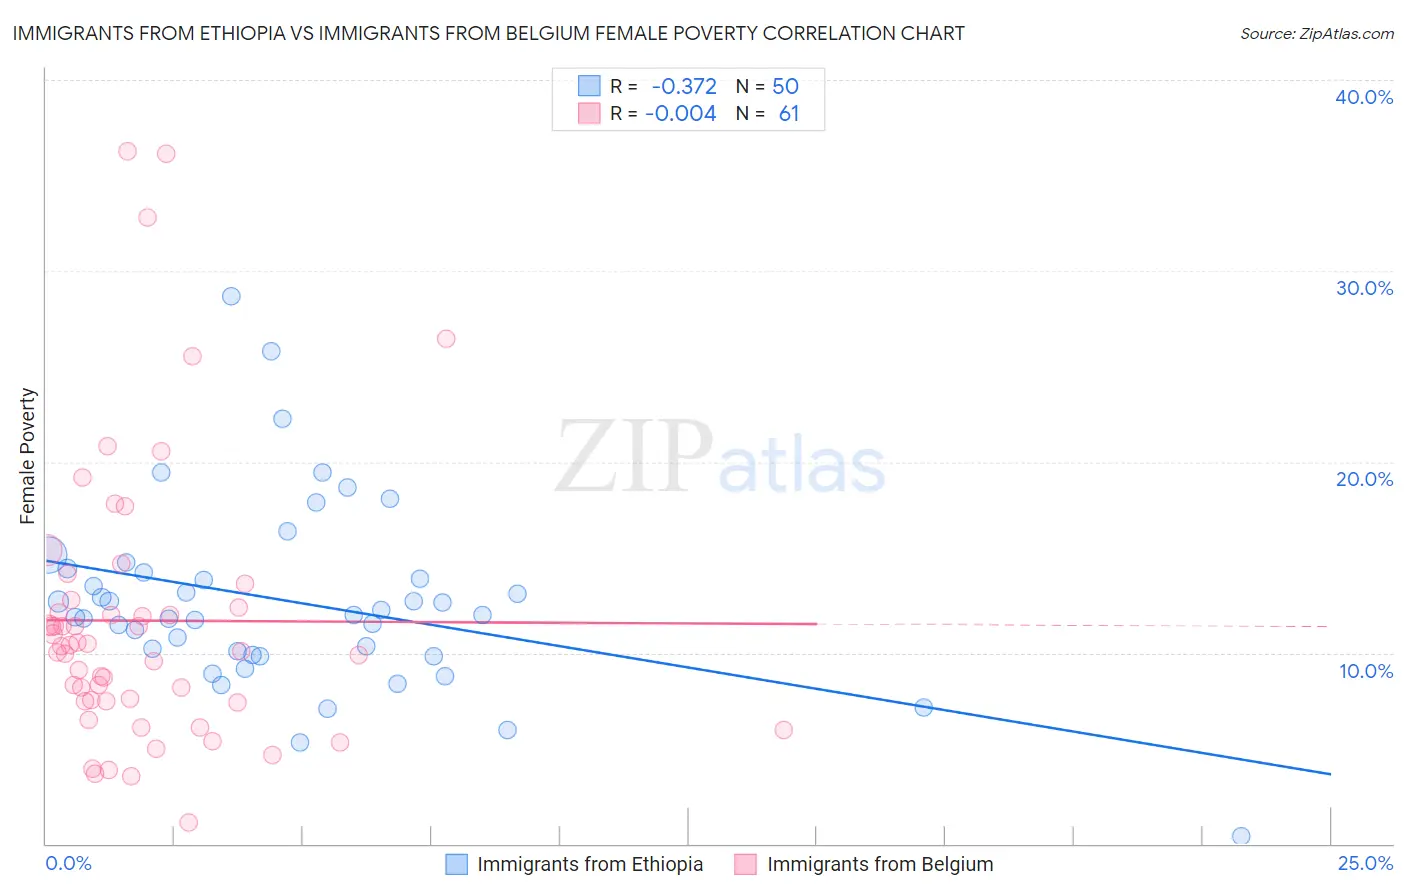 Immigrants from Ethiopia vs Immigrants from Belgium Female Poverty